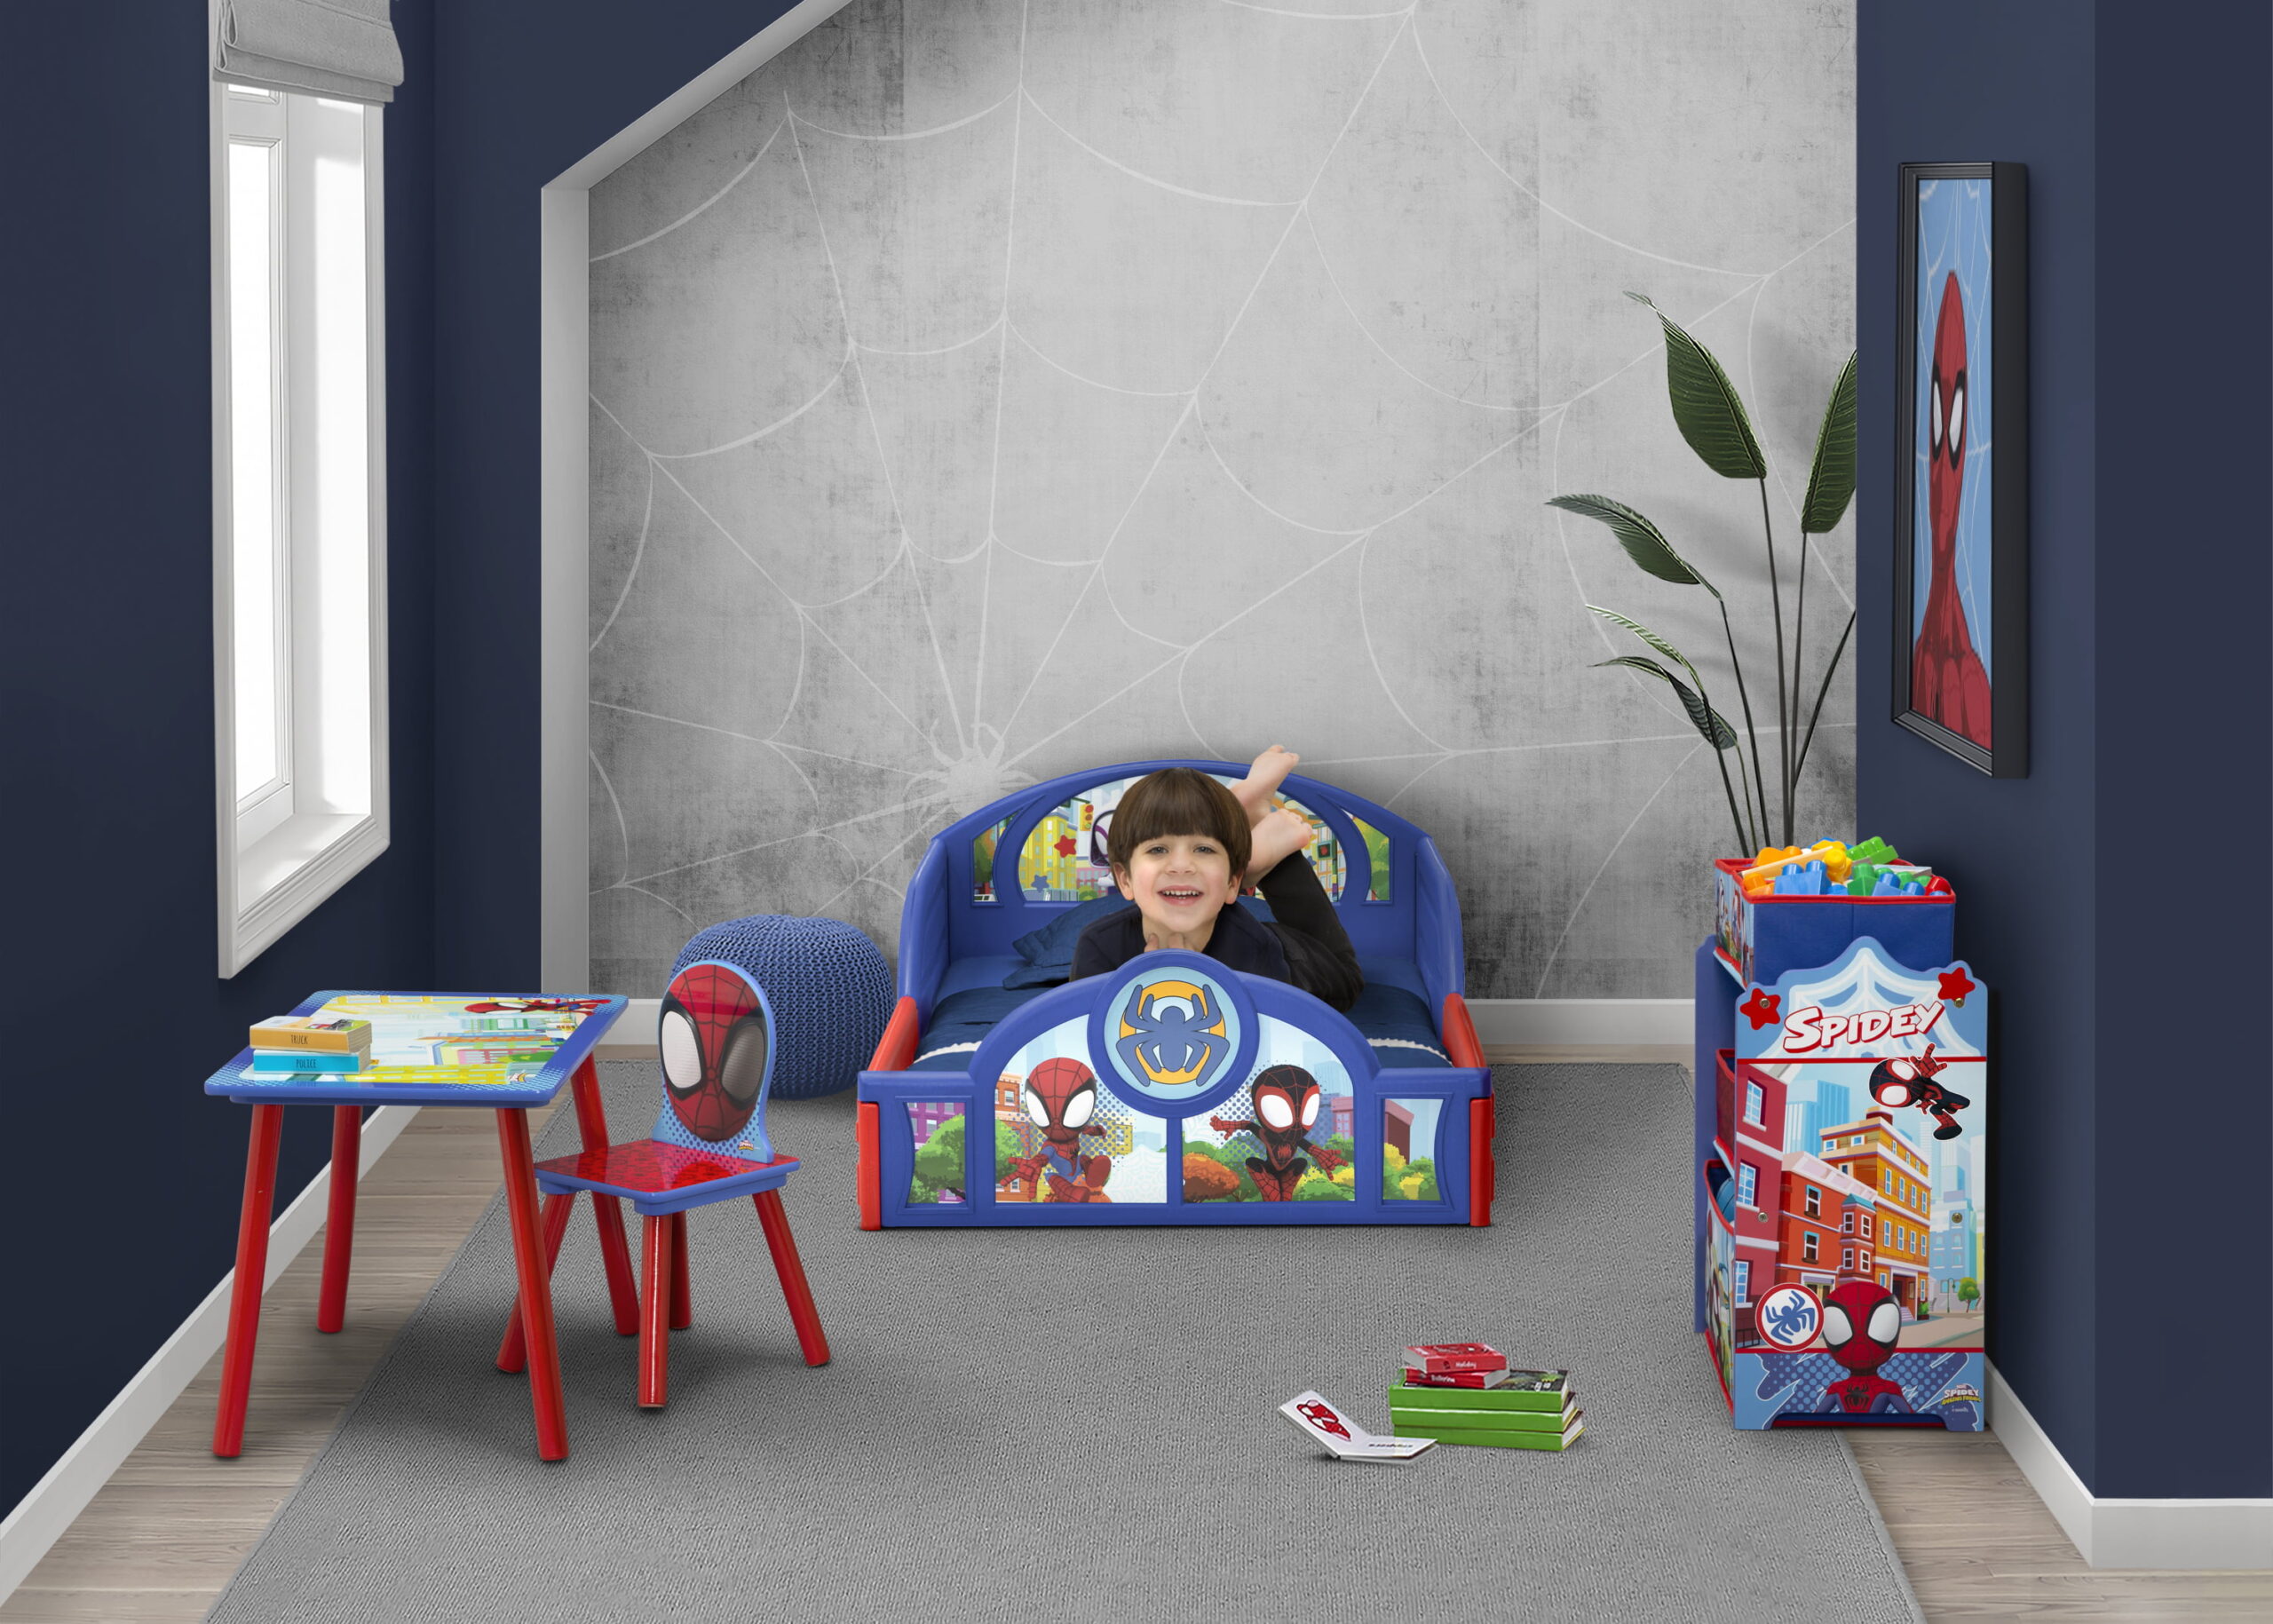 Marvel Spidey & His Amazing Friends Spidey Time 4-Piece Toddler Bedding  Set